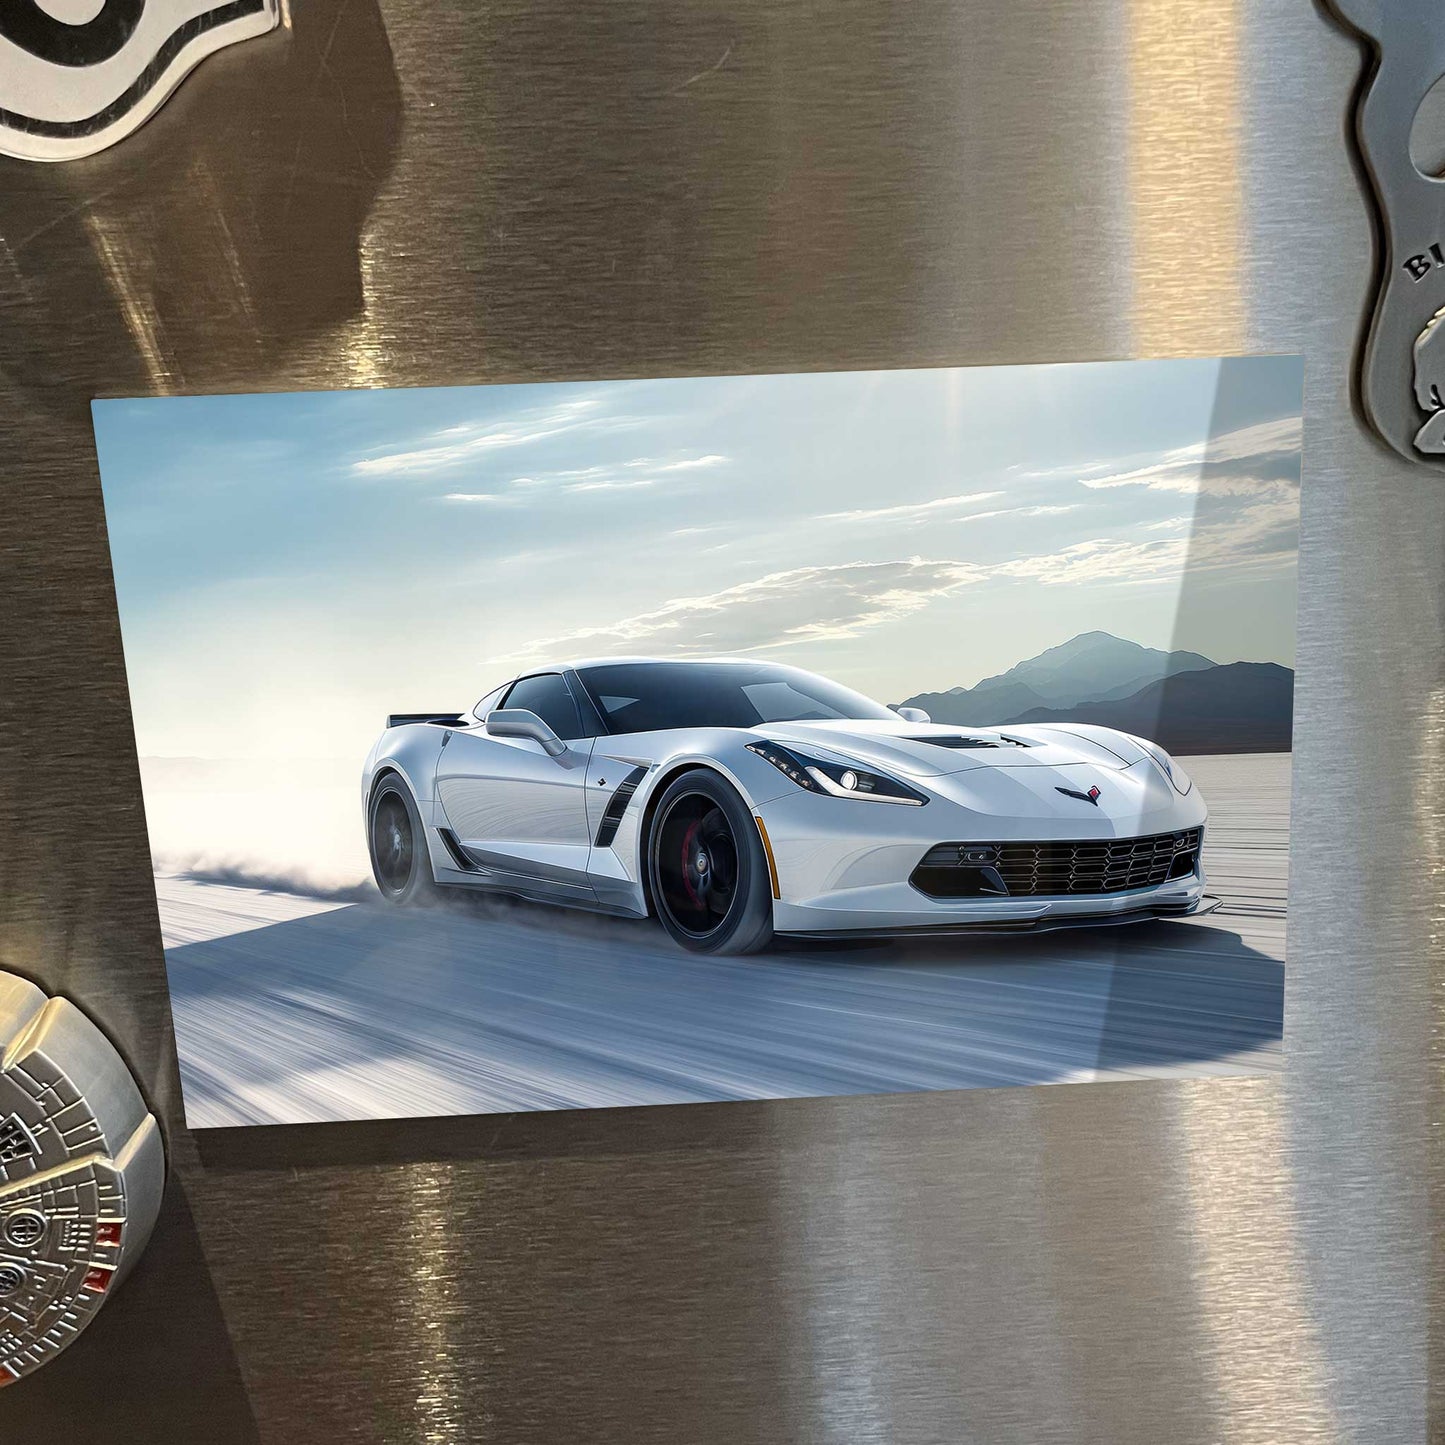 White 2019 Corvette C7 Metal Poster